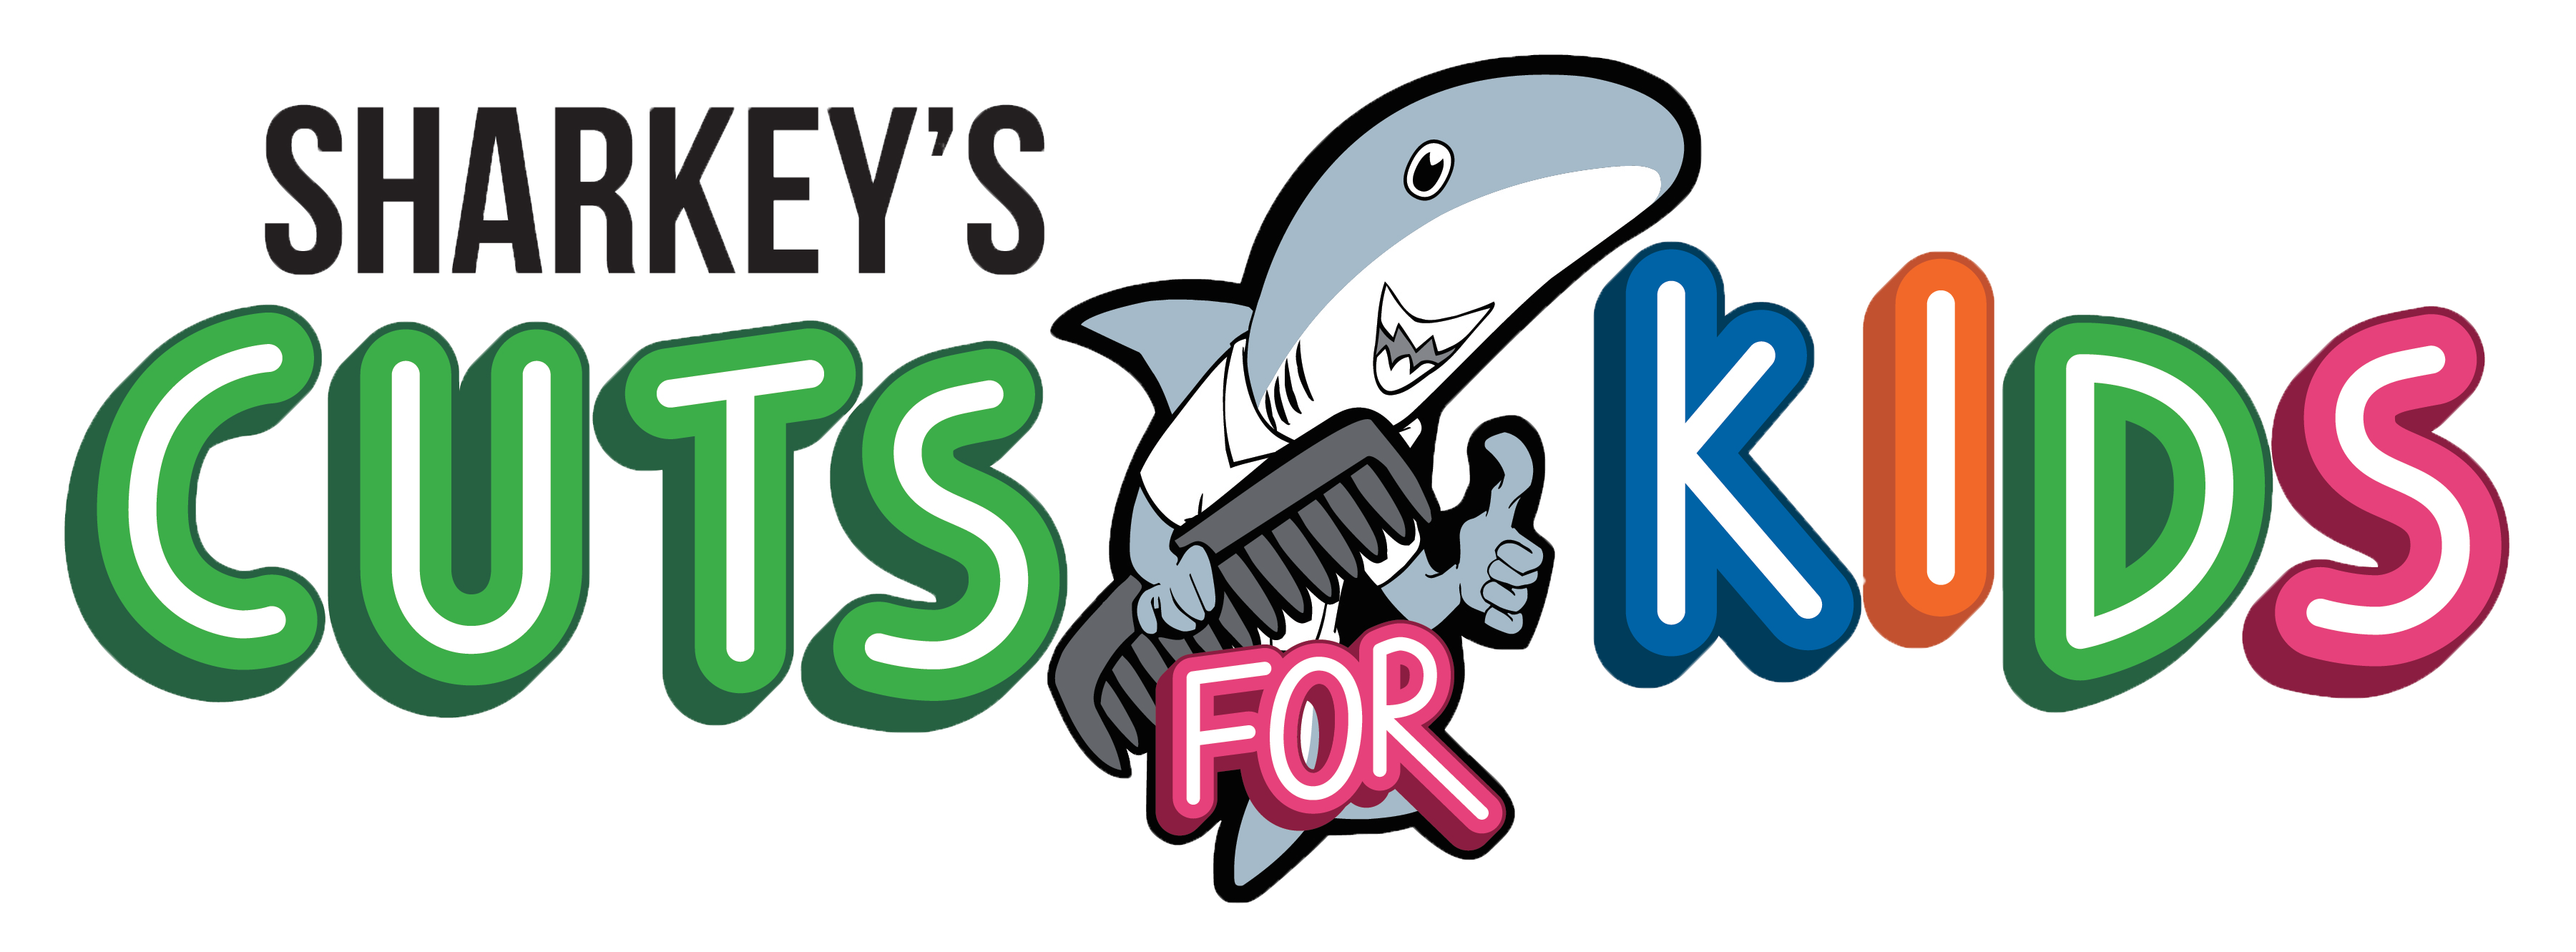 Sharkey’s Cuts for Kids – Round Rock